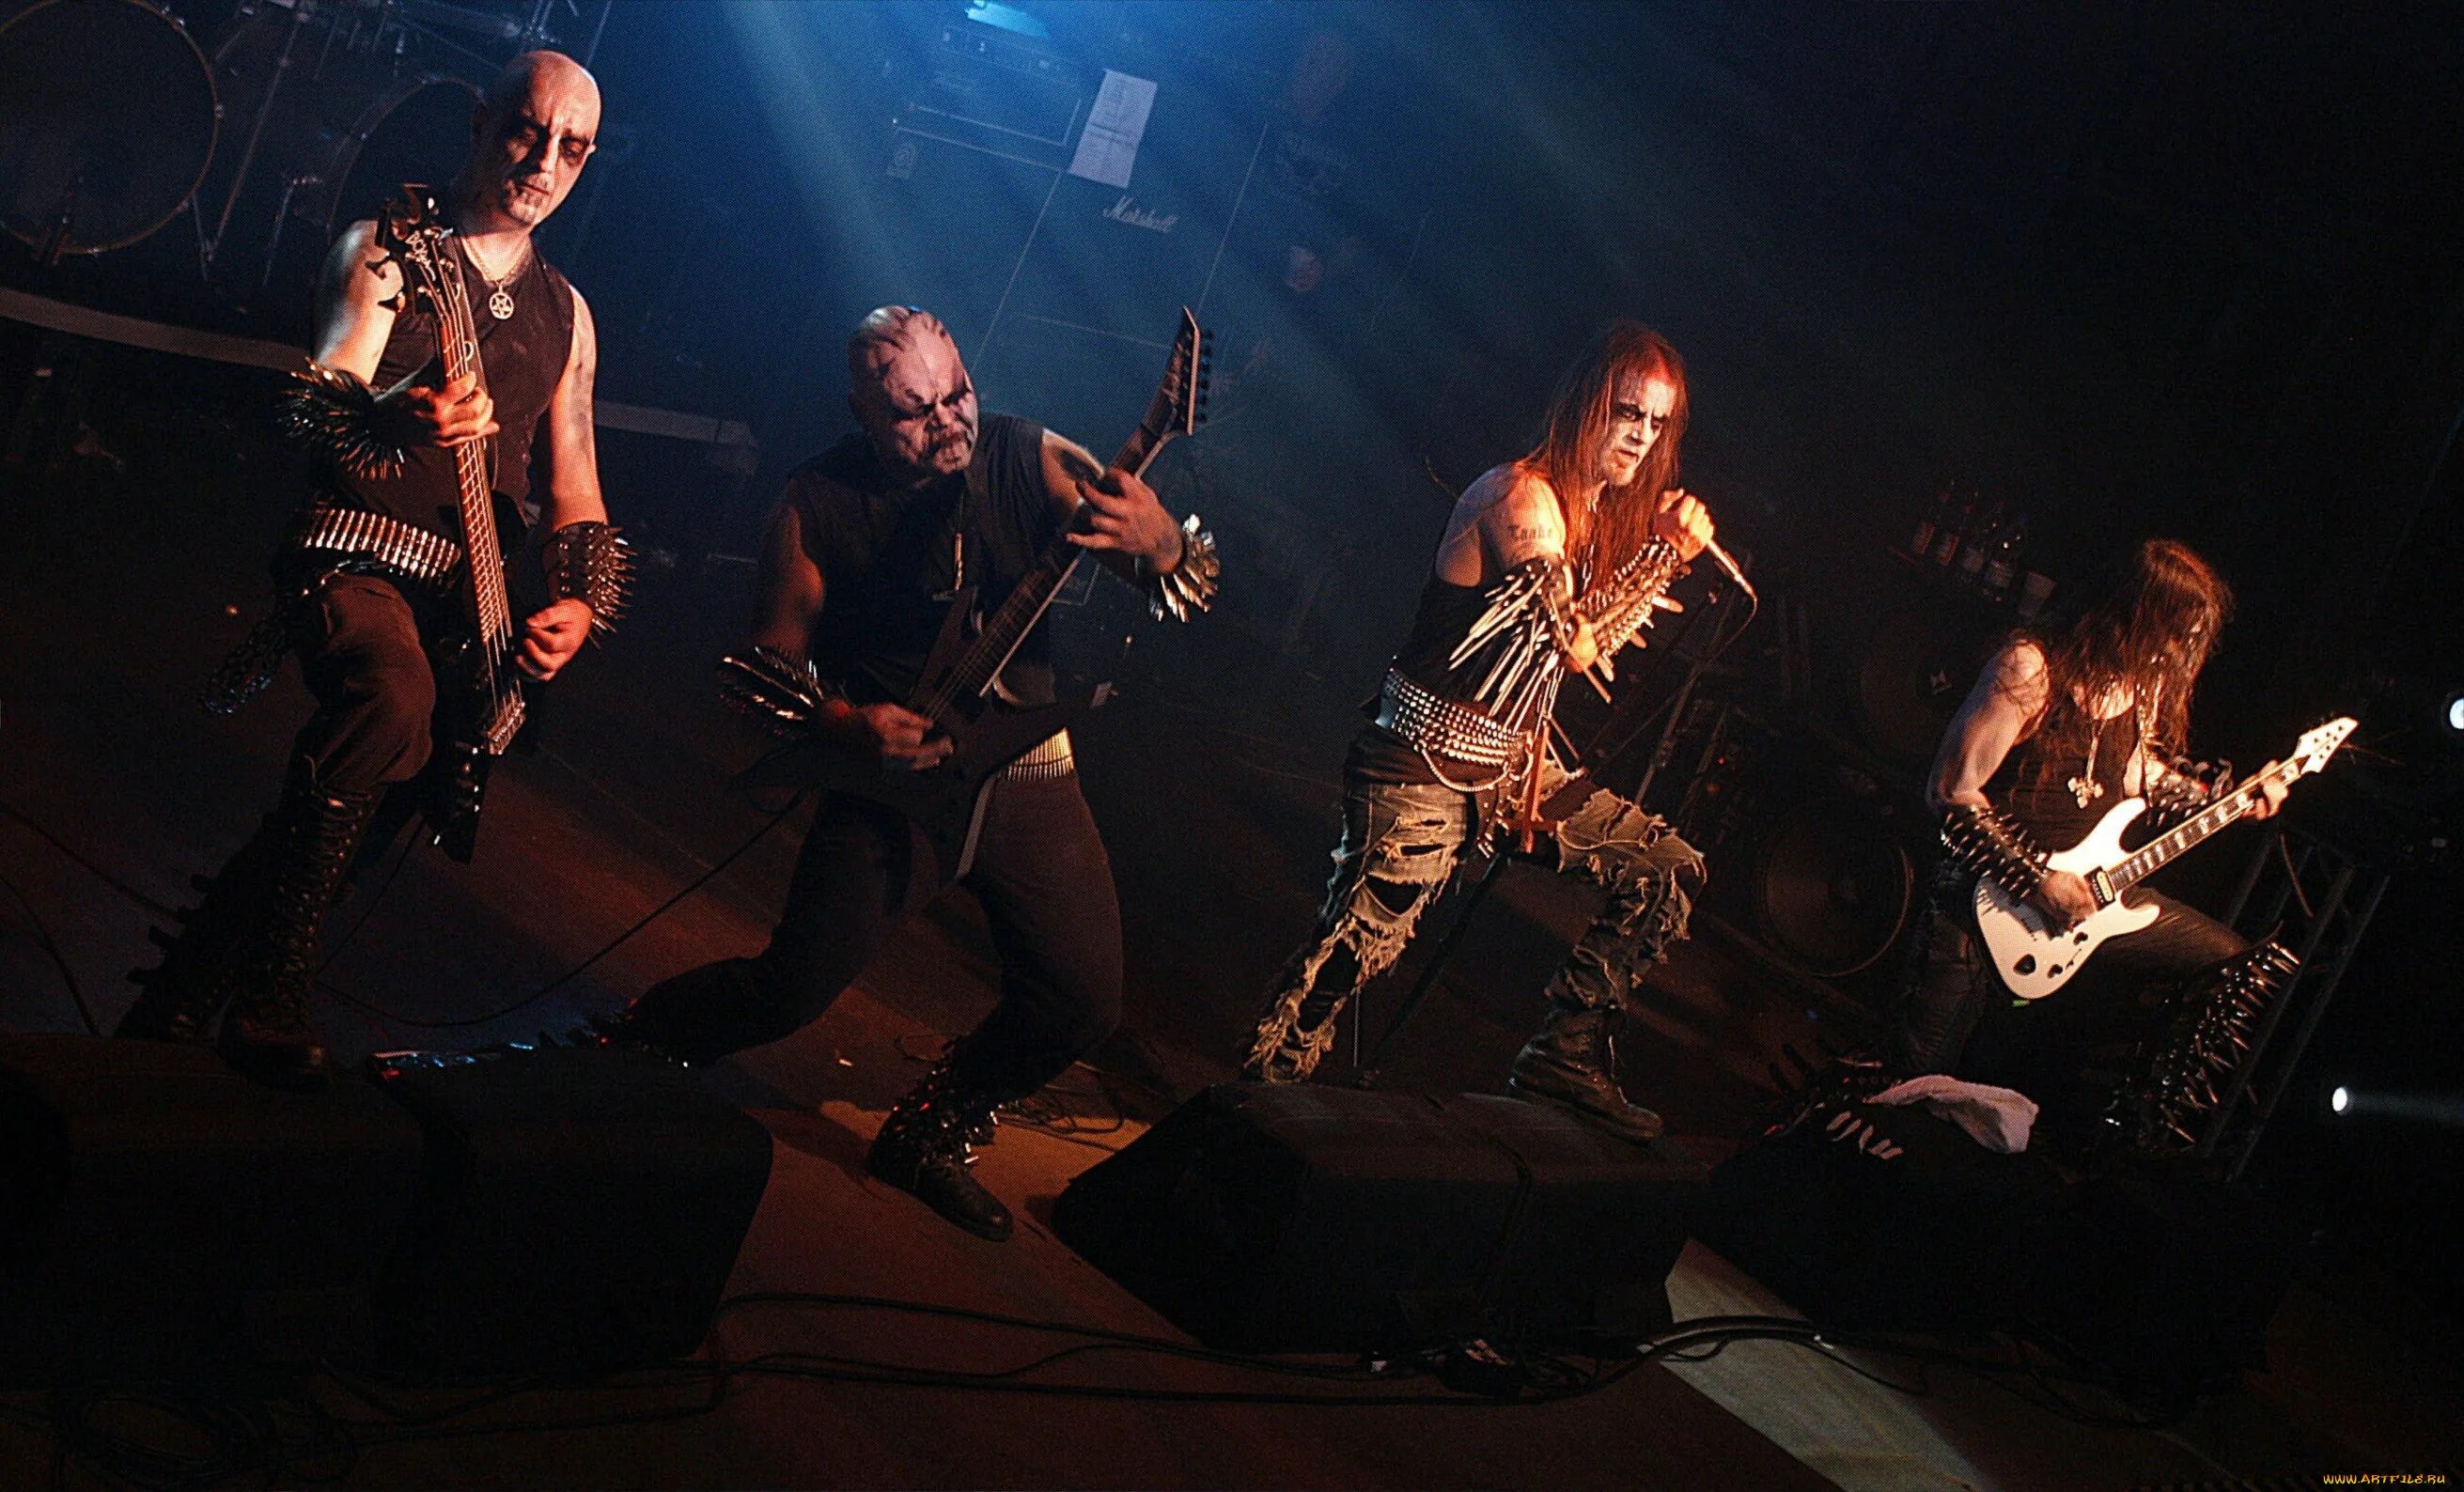 Блэк метал группа Горгорот. Gorgoroth группа сатанисты. Тяжелая музыка без слов